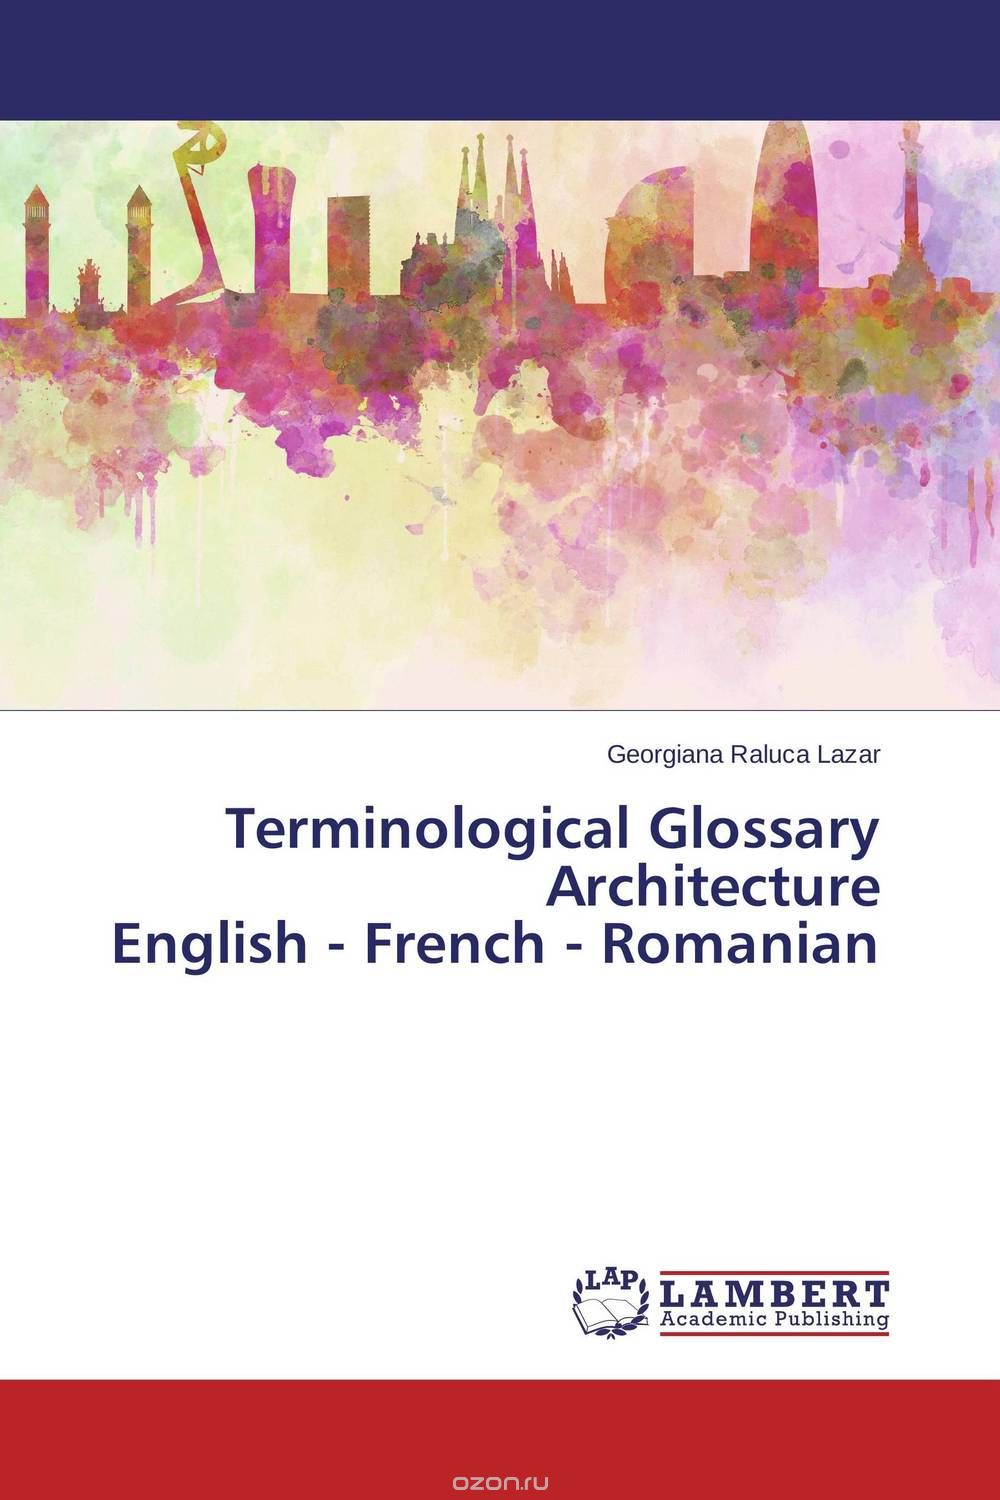 Скачать книгу "Terminological Glossary Architecture English - French - Romanian"